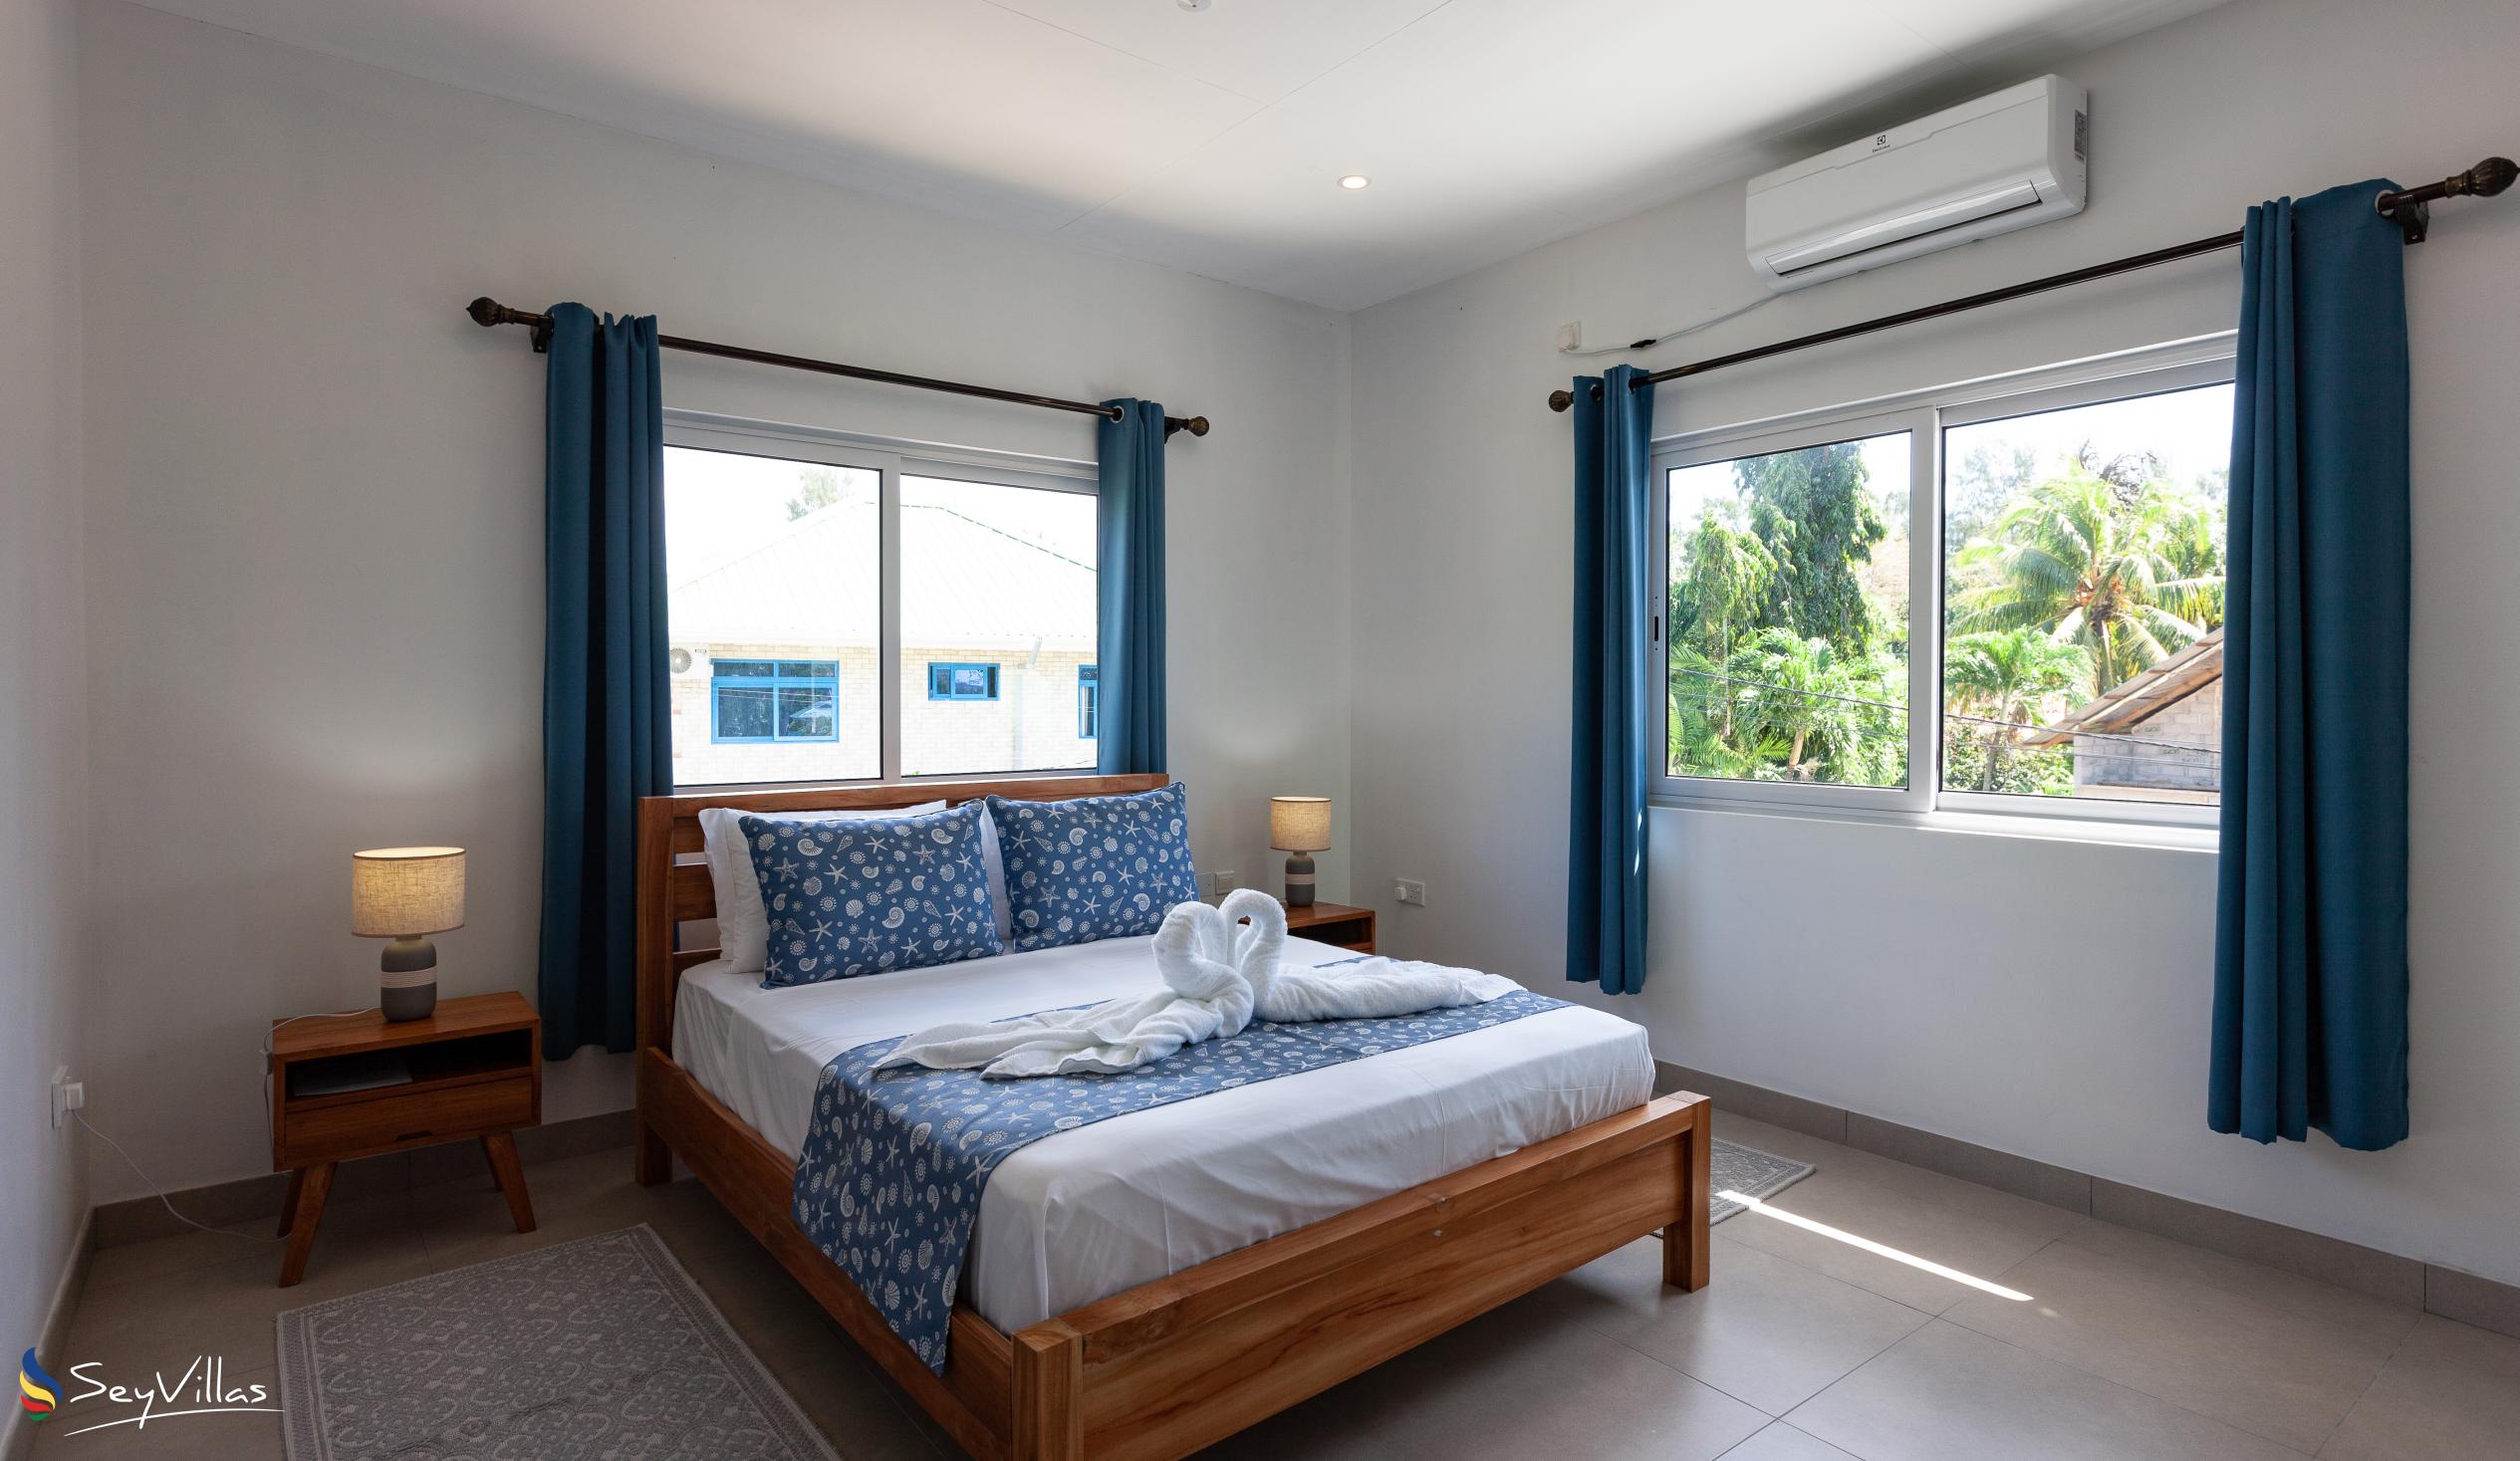 Foto 43: Maison Marie-Jeanne - Appartement 4 chambres - Praslin (Seychelles)